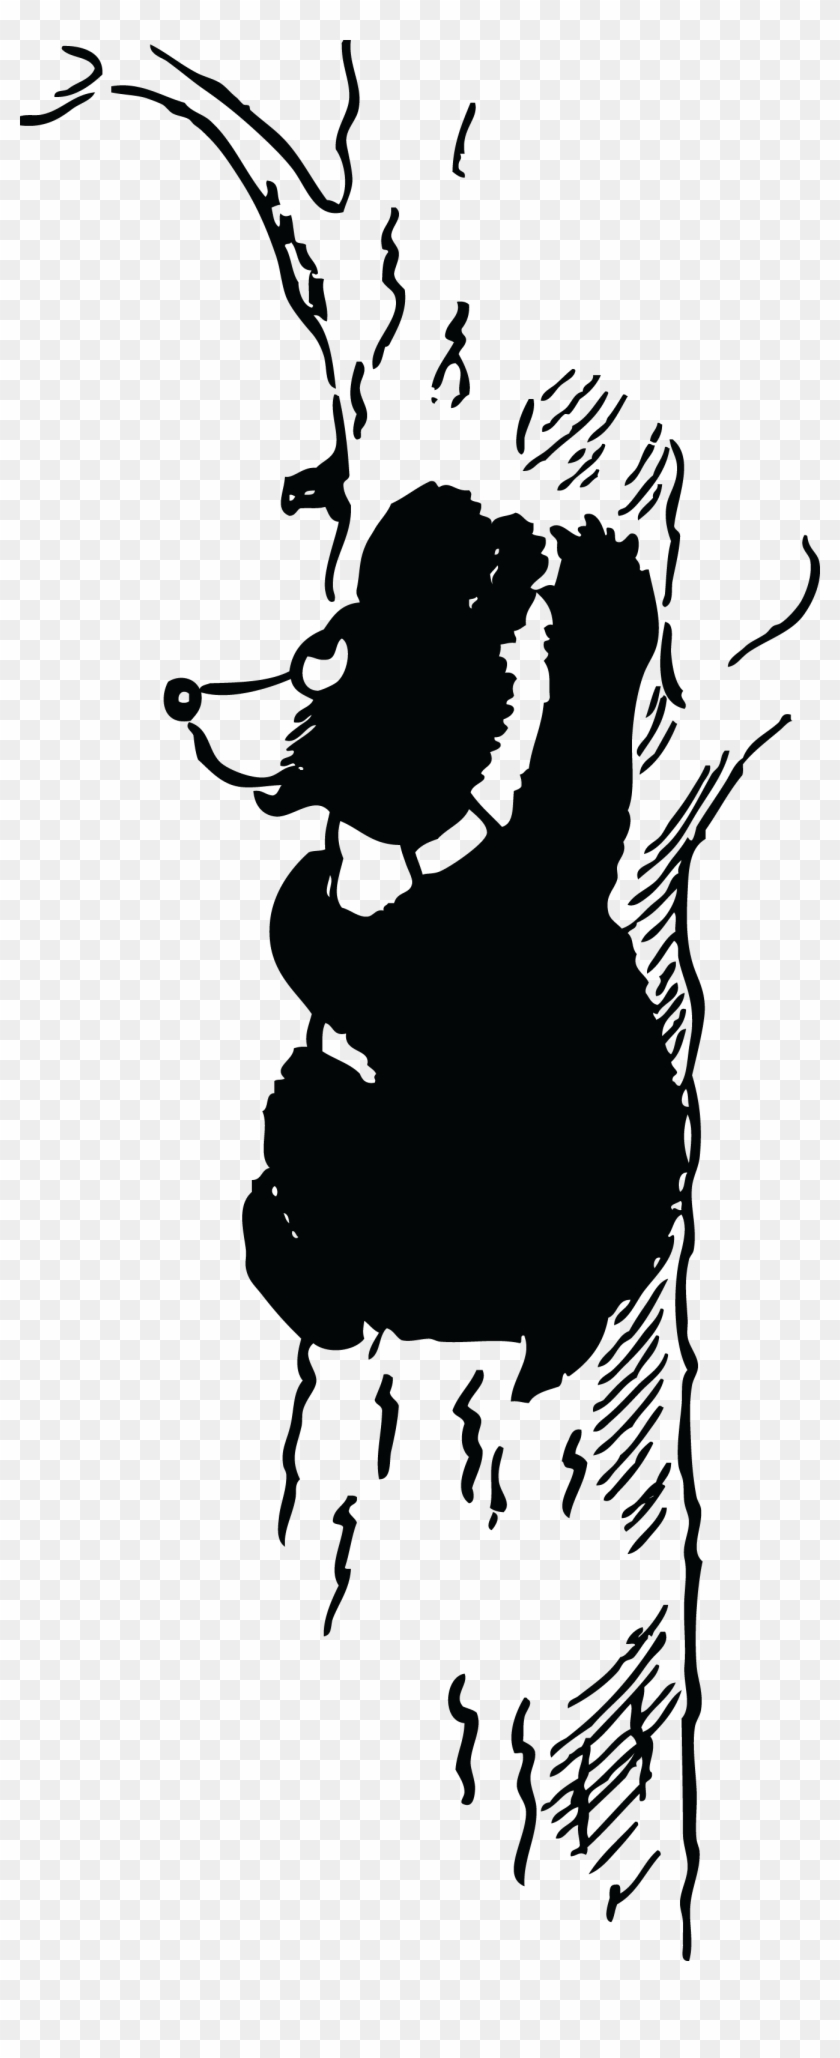 Cartoon Black Bear Cub Climbing A Tree - Cartoon Black Bear Cub Climbing Atree Mrt Women Longsleeve #913277